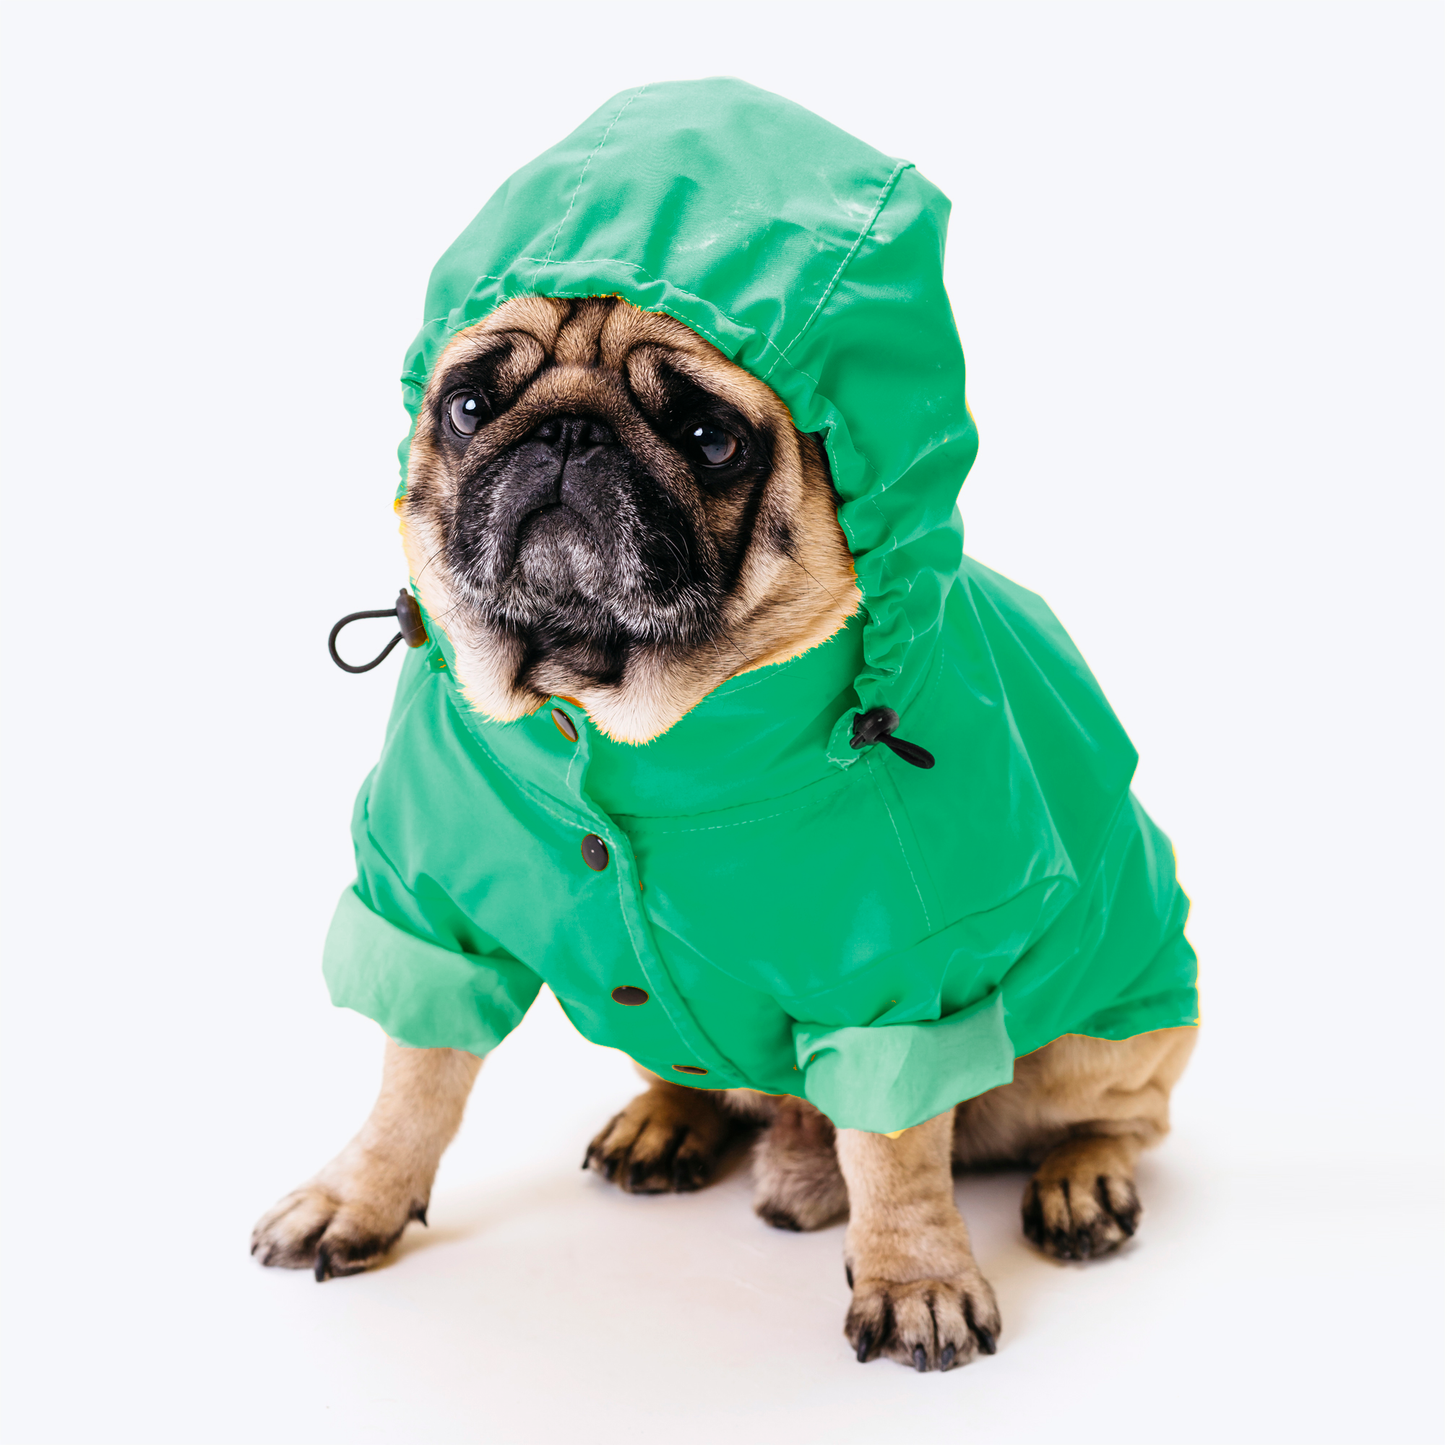 Waterproof dog suit